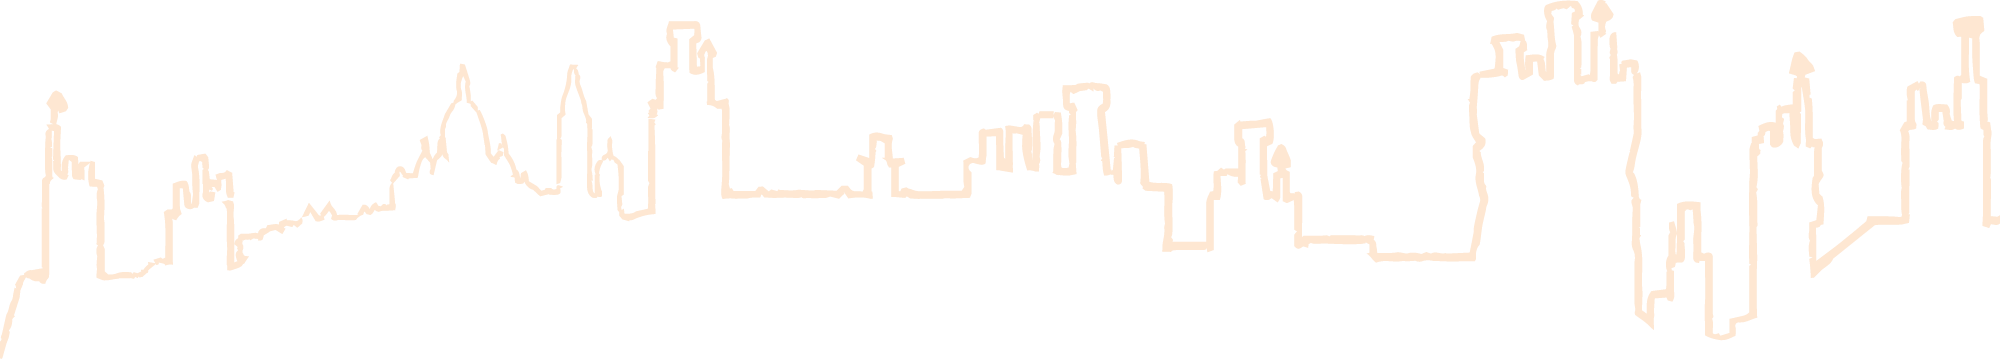 drawing of Parisian skyline